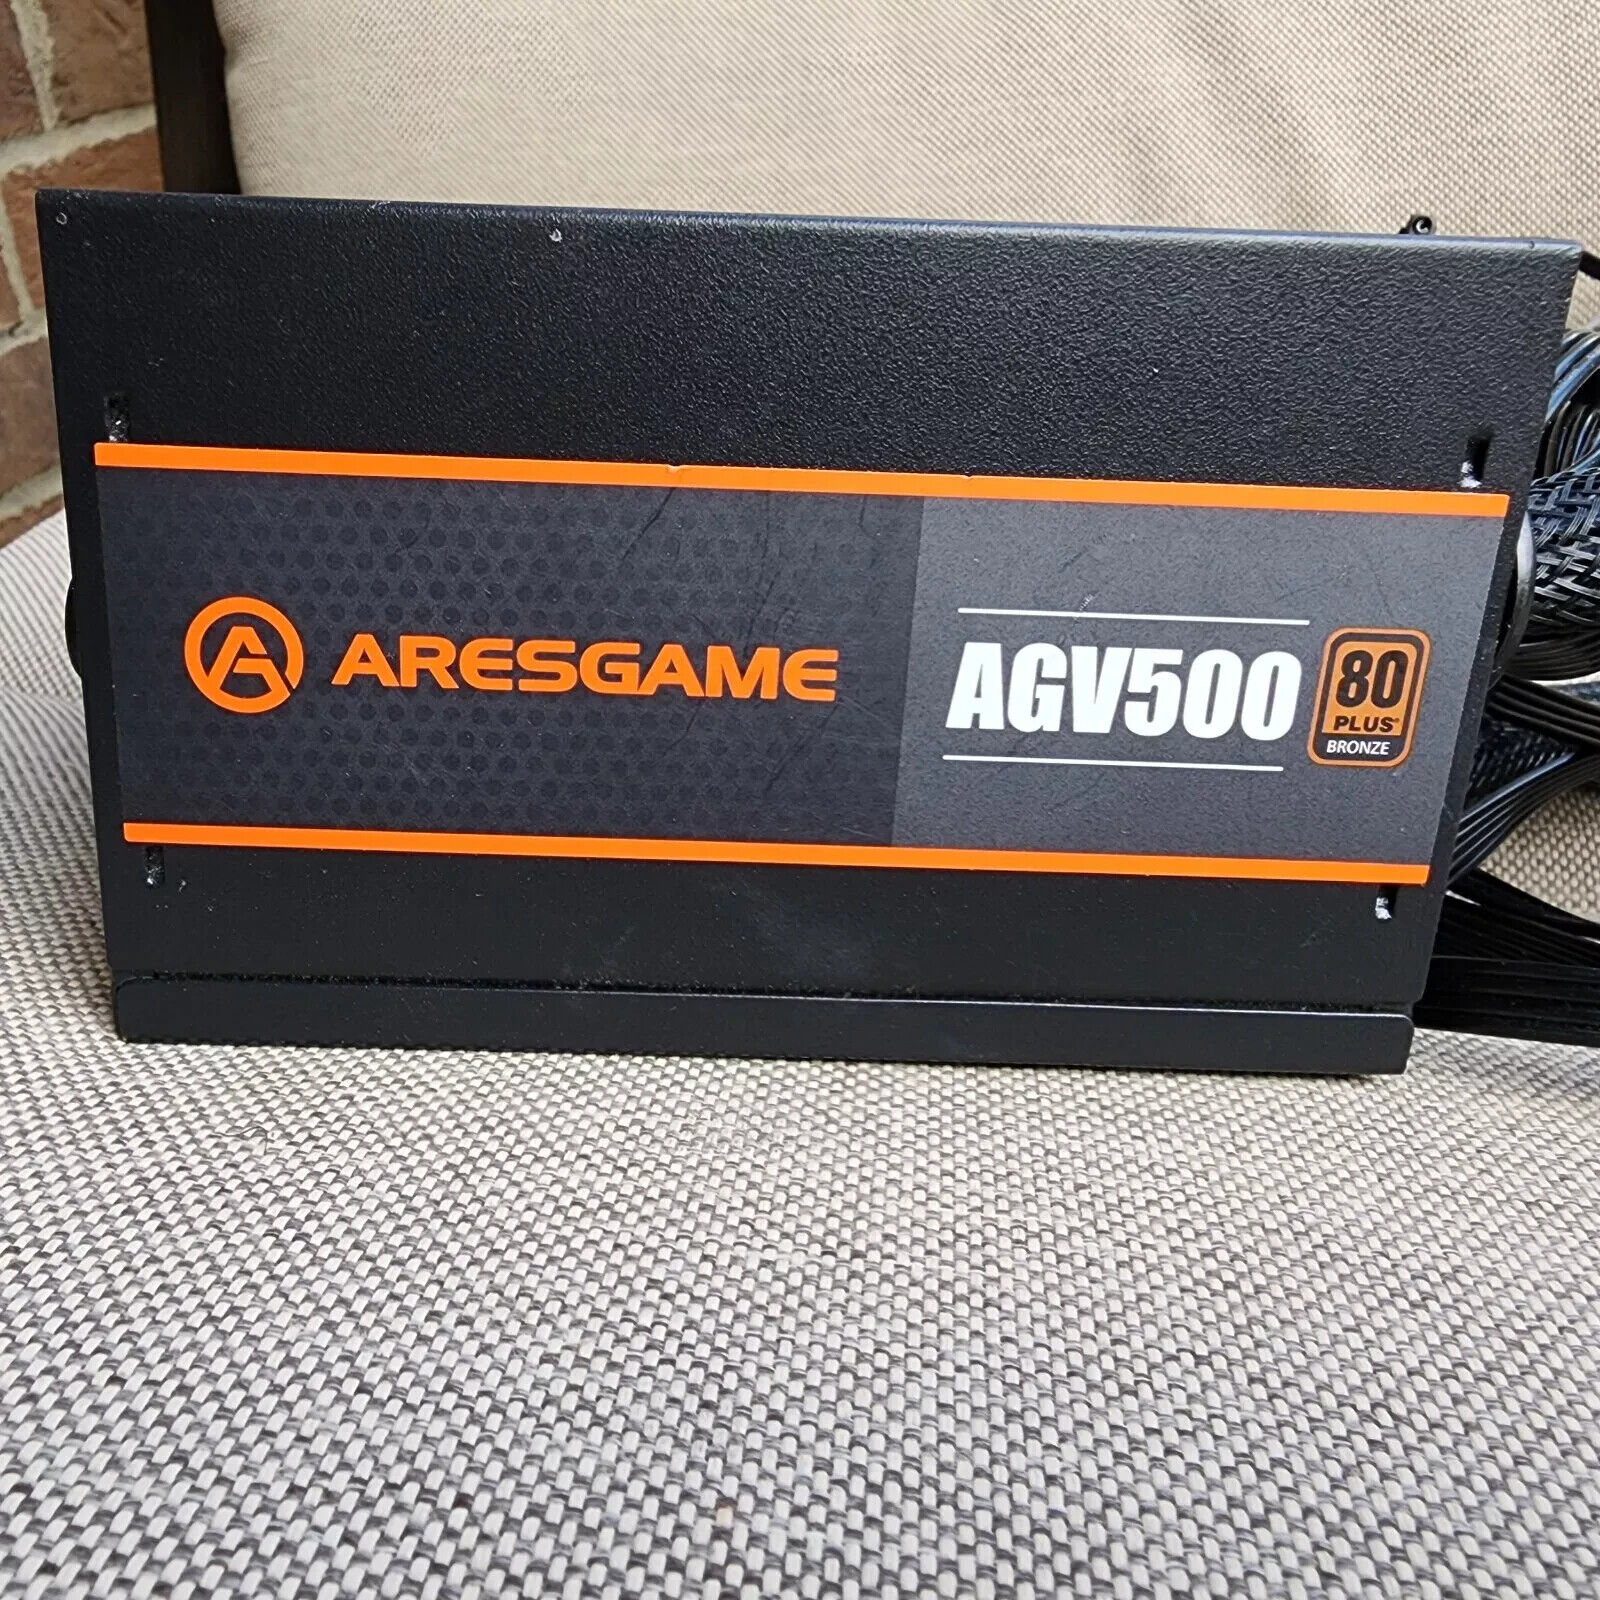 New Aresgame Power Supply AGV500w 80 plus Non-Modular Power Supply - No Manual